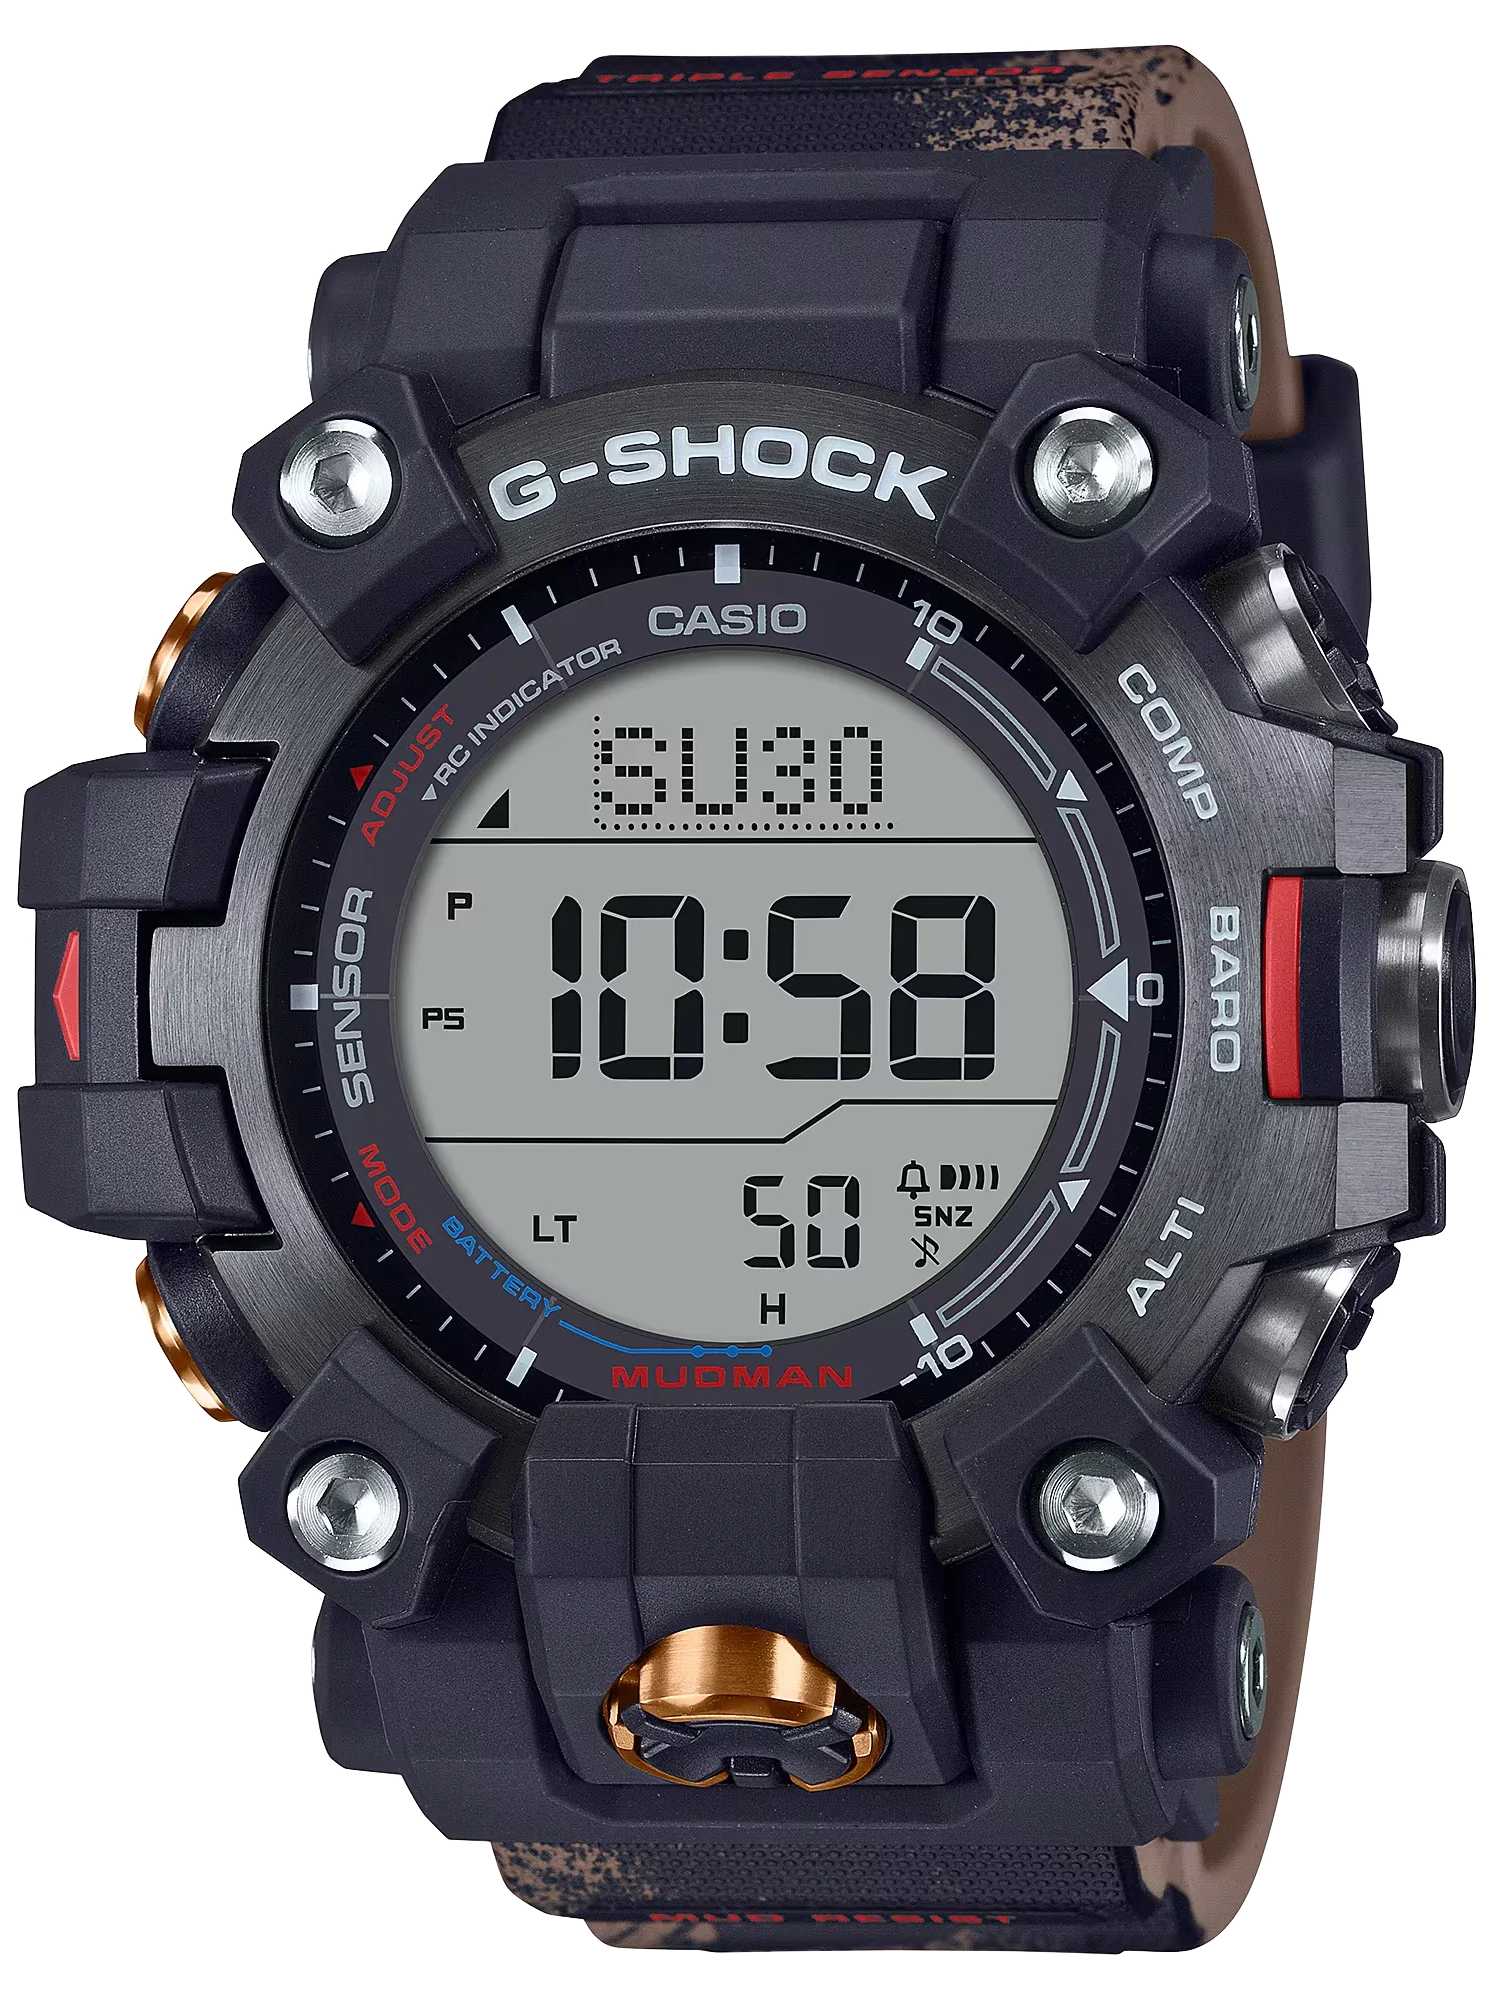 Casio G-shock Mudmaster Gwg-2000-1a5er Uhr  G shock, Relojes g-shock, Reloj  de pulsera hombre